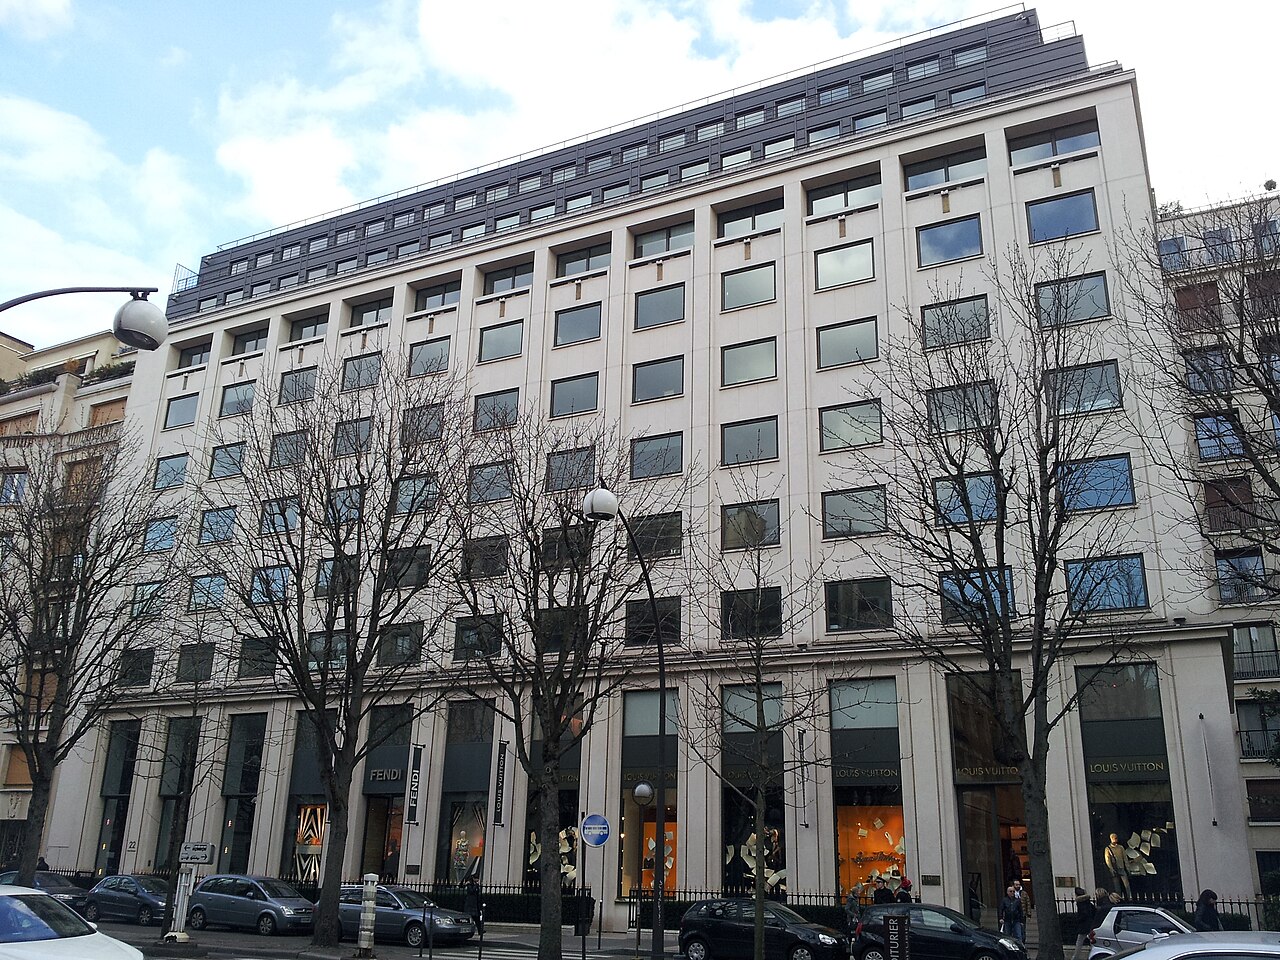 The LVMH headquarters in Avenue Montaigne, Paris